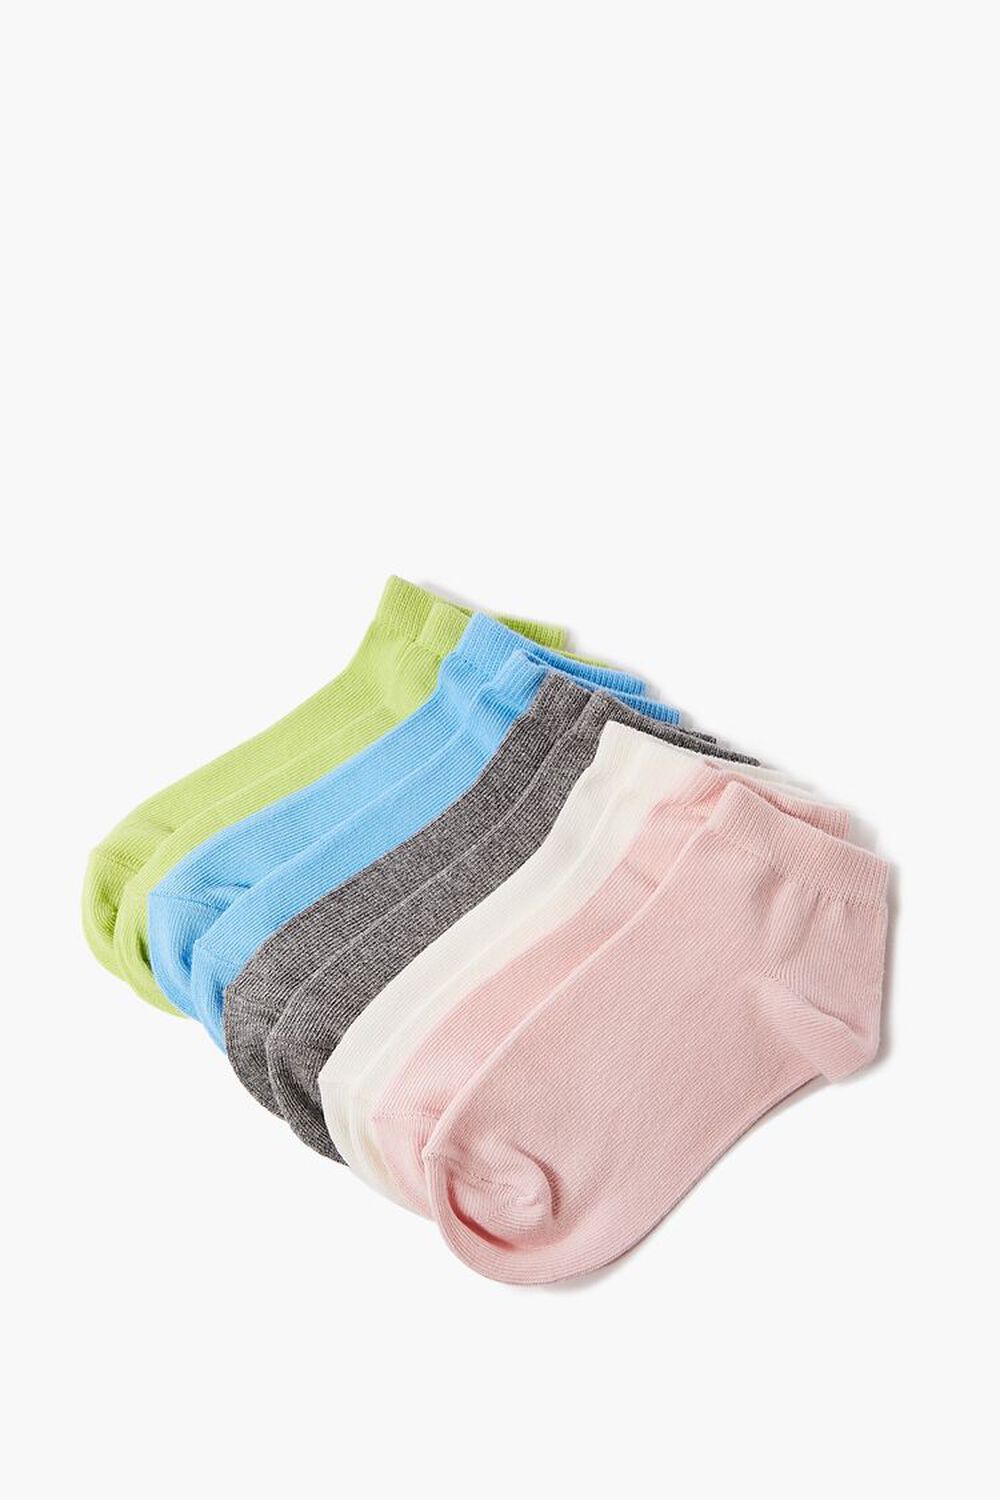 Girls Organically Grown Cotton Socks - 5 pack (Kids), image 2